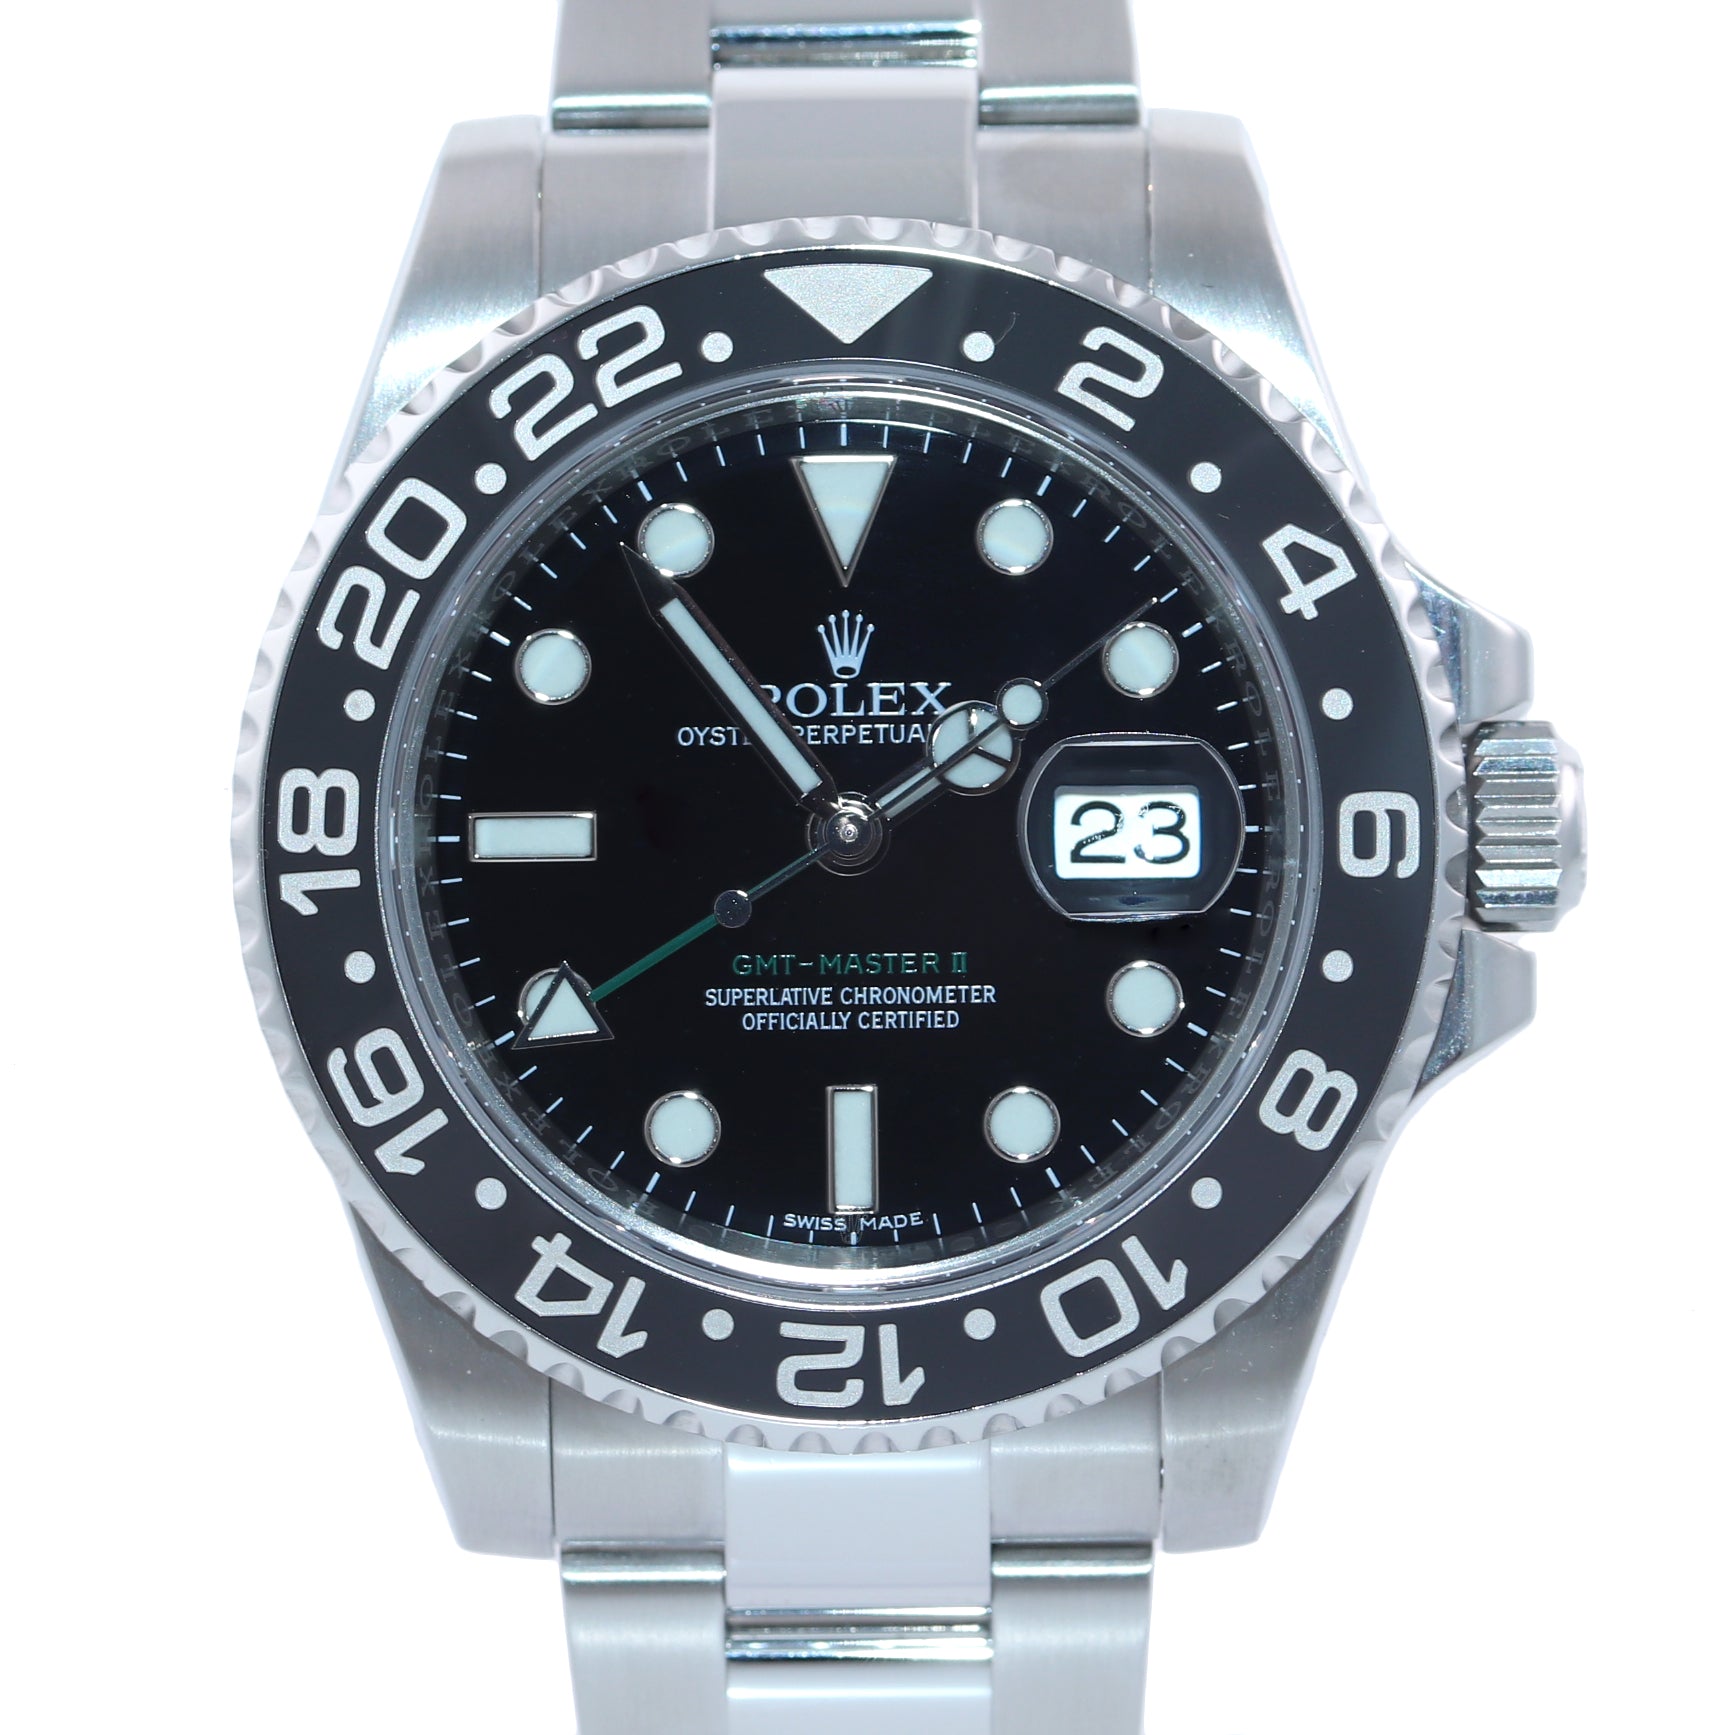 MINT 2015 PAPERS Rolex GMT Master 116710 Steel Ceramic 40mm Black Watch Box